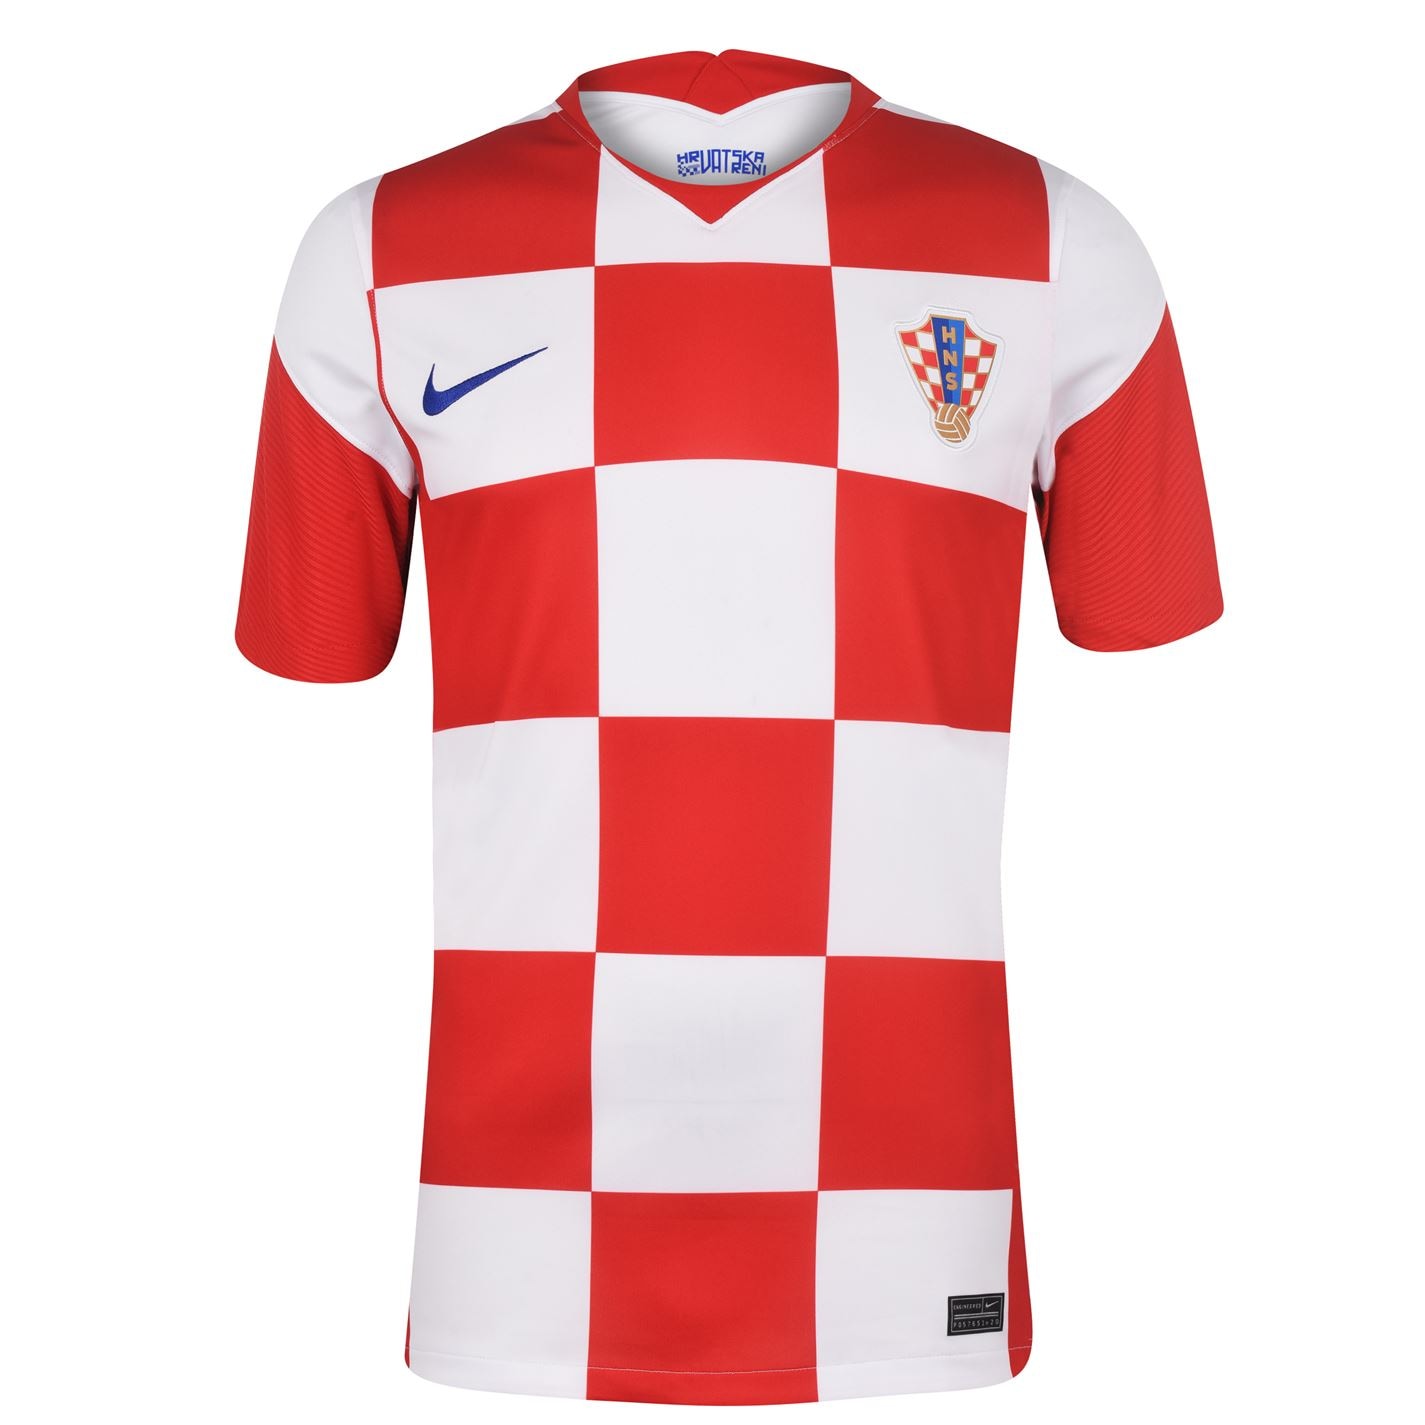 Tricou Acasa Nike Croatia 2020 alb rosu